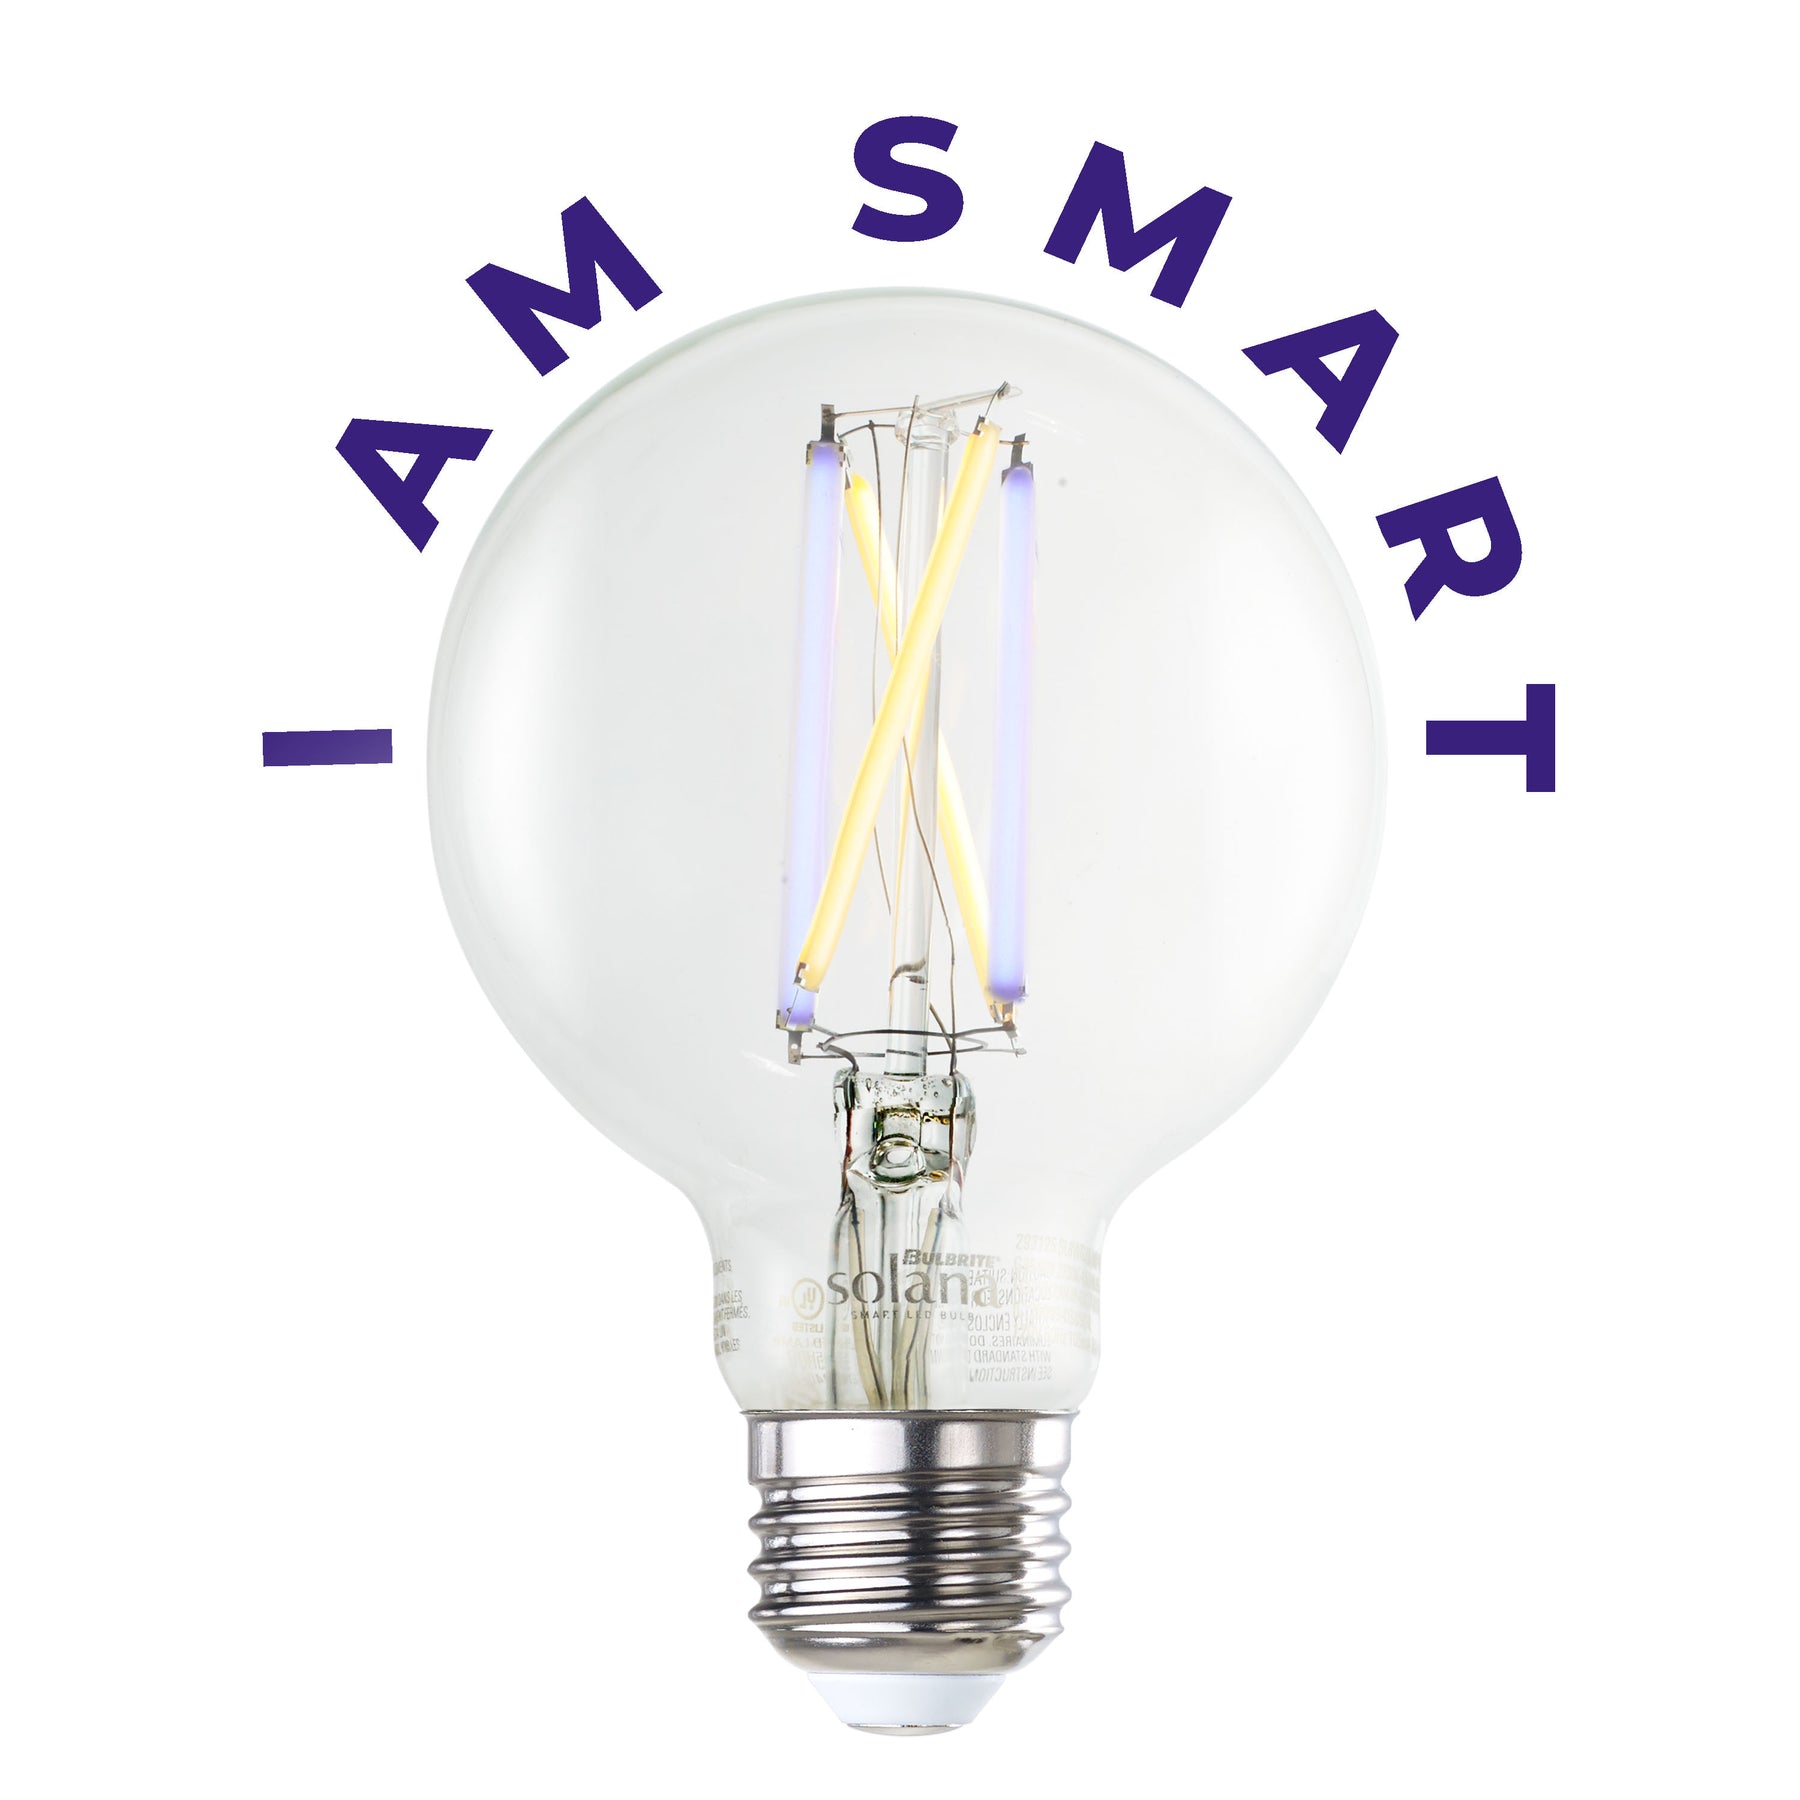 60W Equiv LED Wi-Fi Smart Bulb - Globe